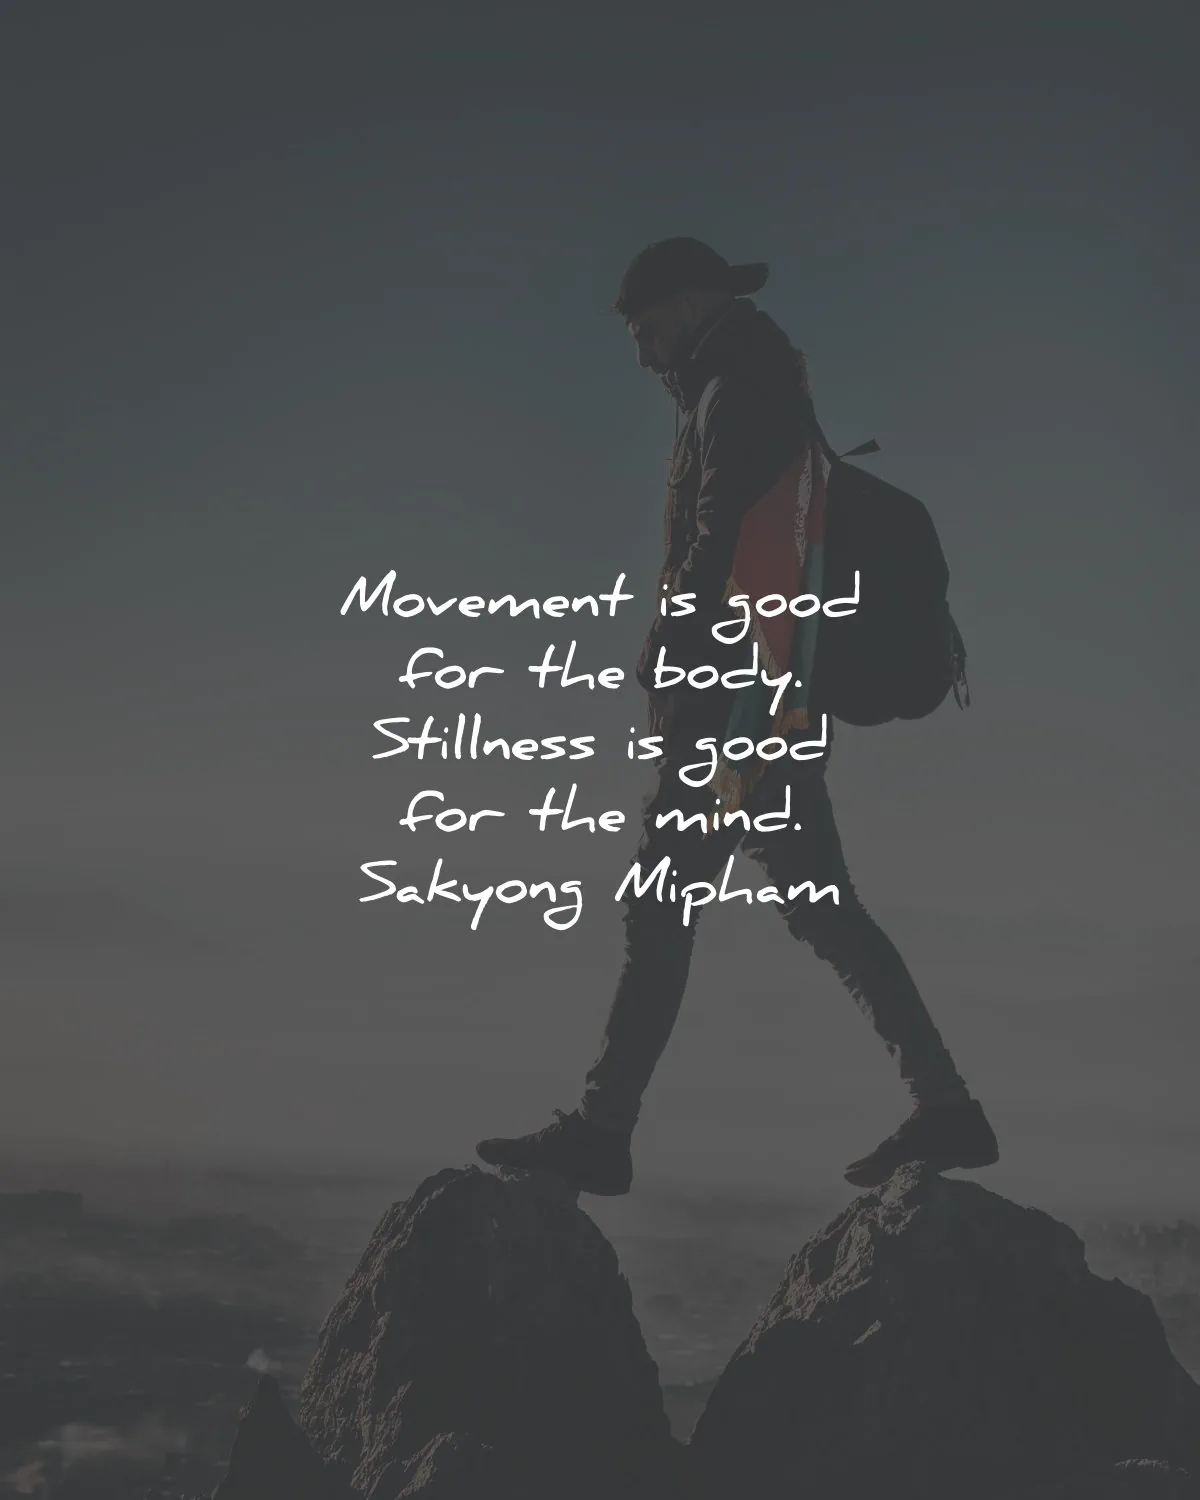 serenity quotes movement good body stillness mind sakyong mipham wisdom